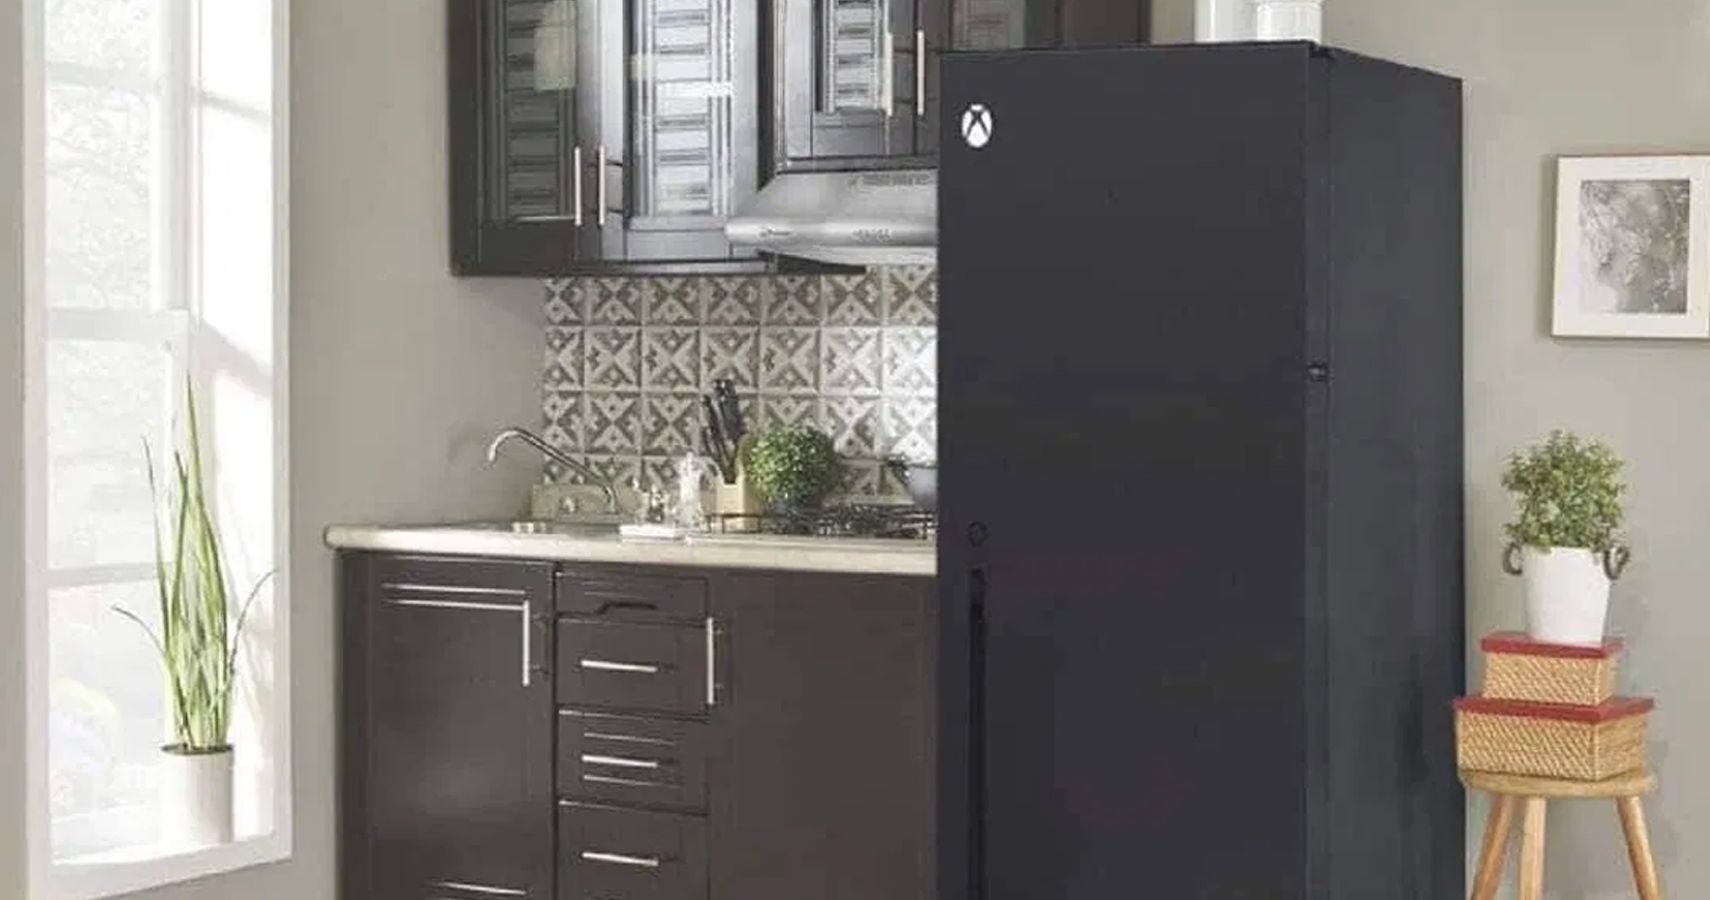 xbox looks like a fridge